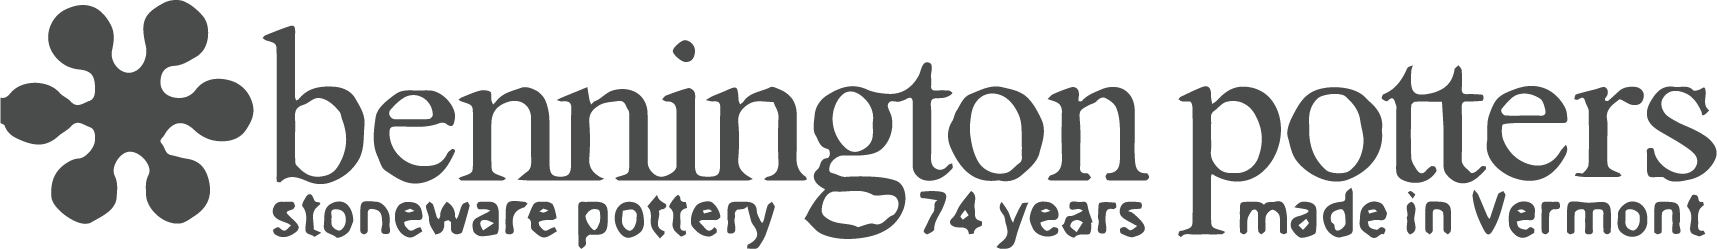 Bennington Potters logo colorless